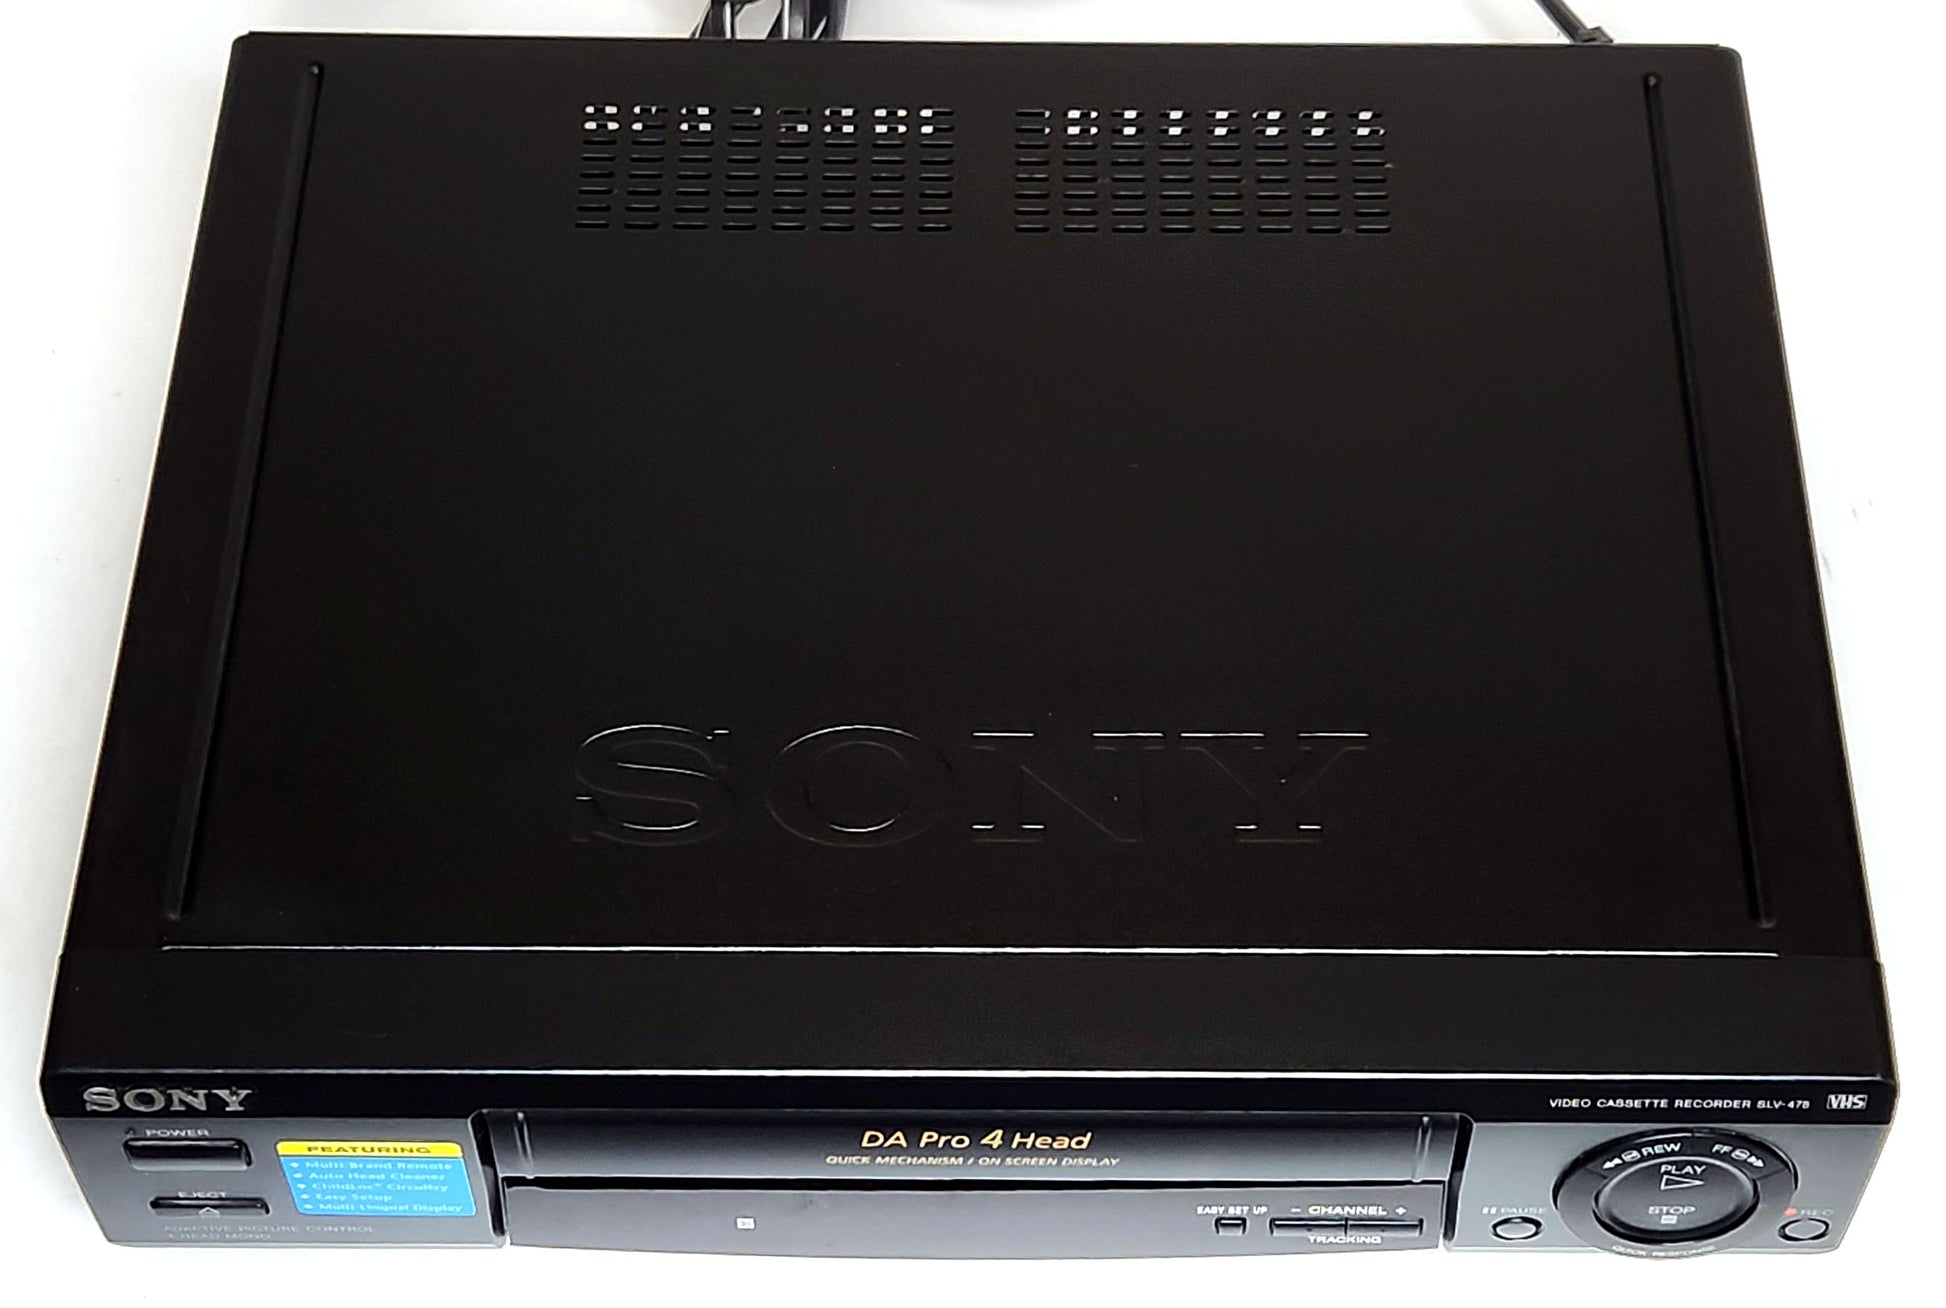 Sony SLV-478 VCR, 4-Head Mono - Top